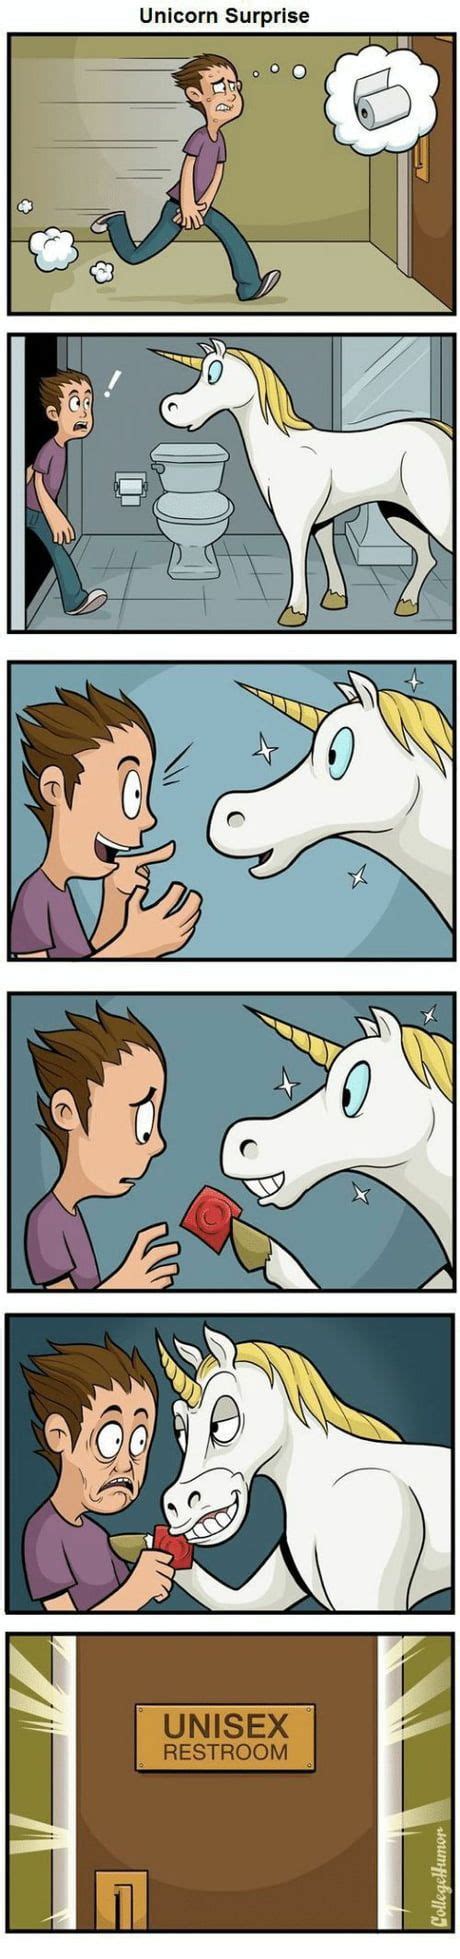 Unicorn Funny Memes Funny Cartoons Funny Comics